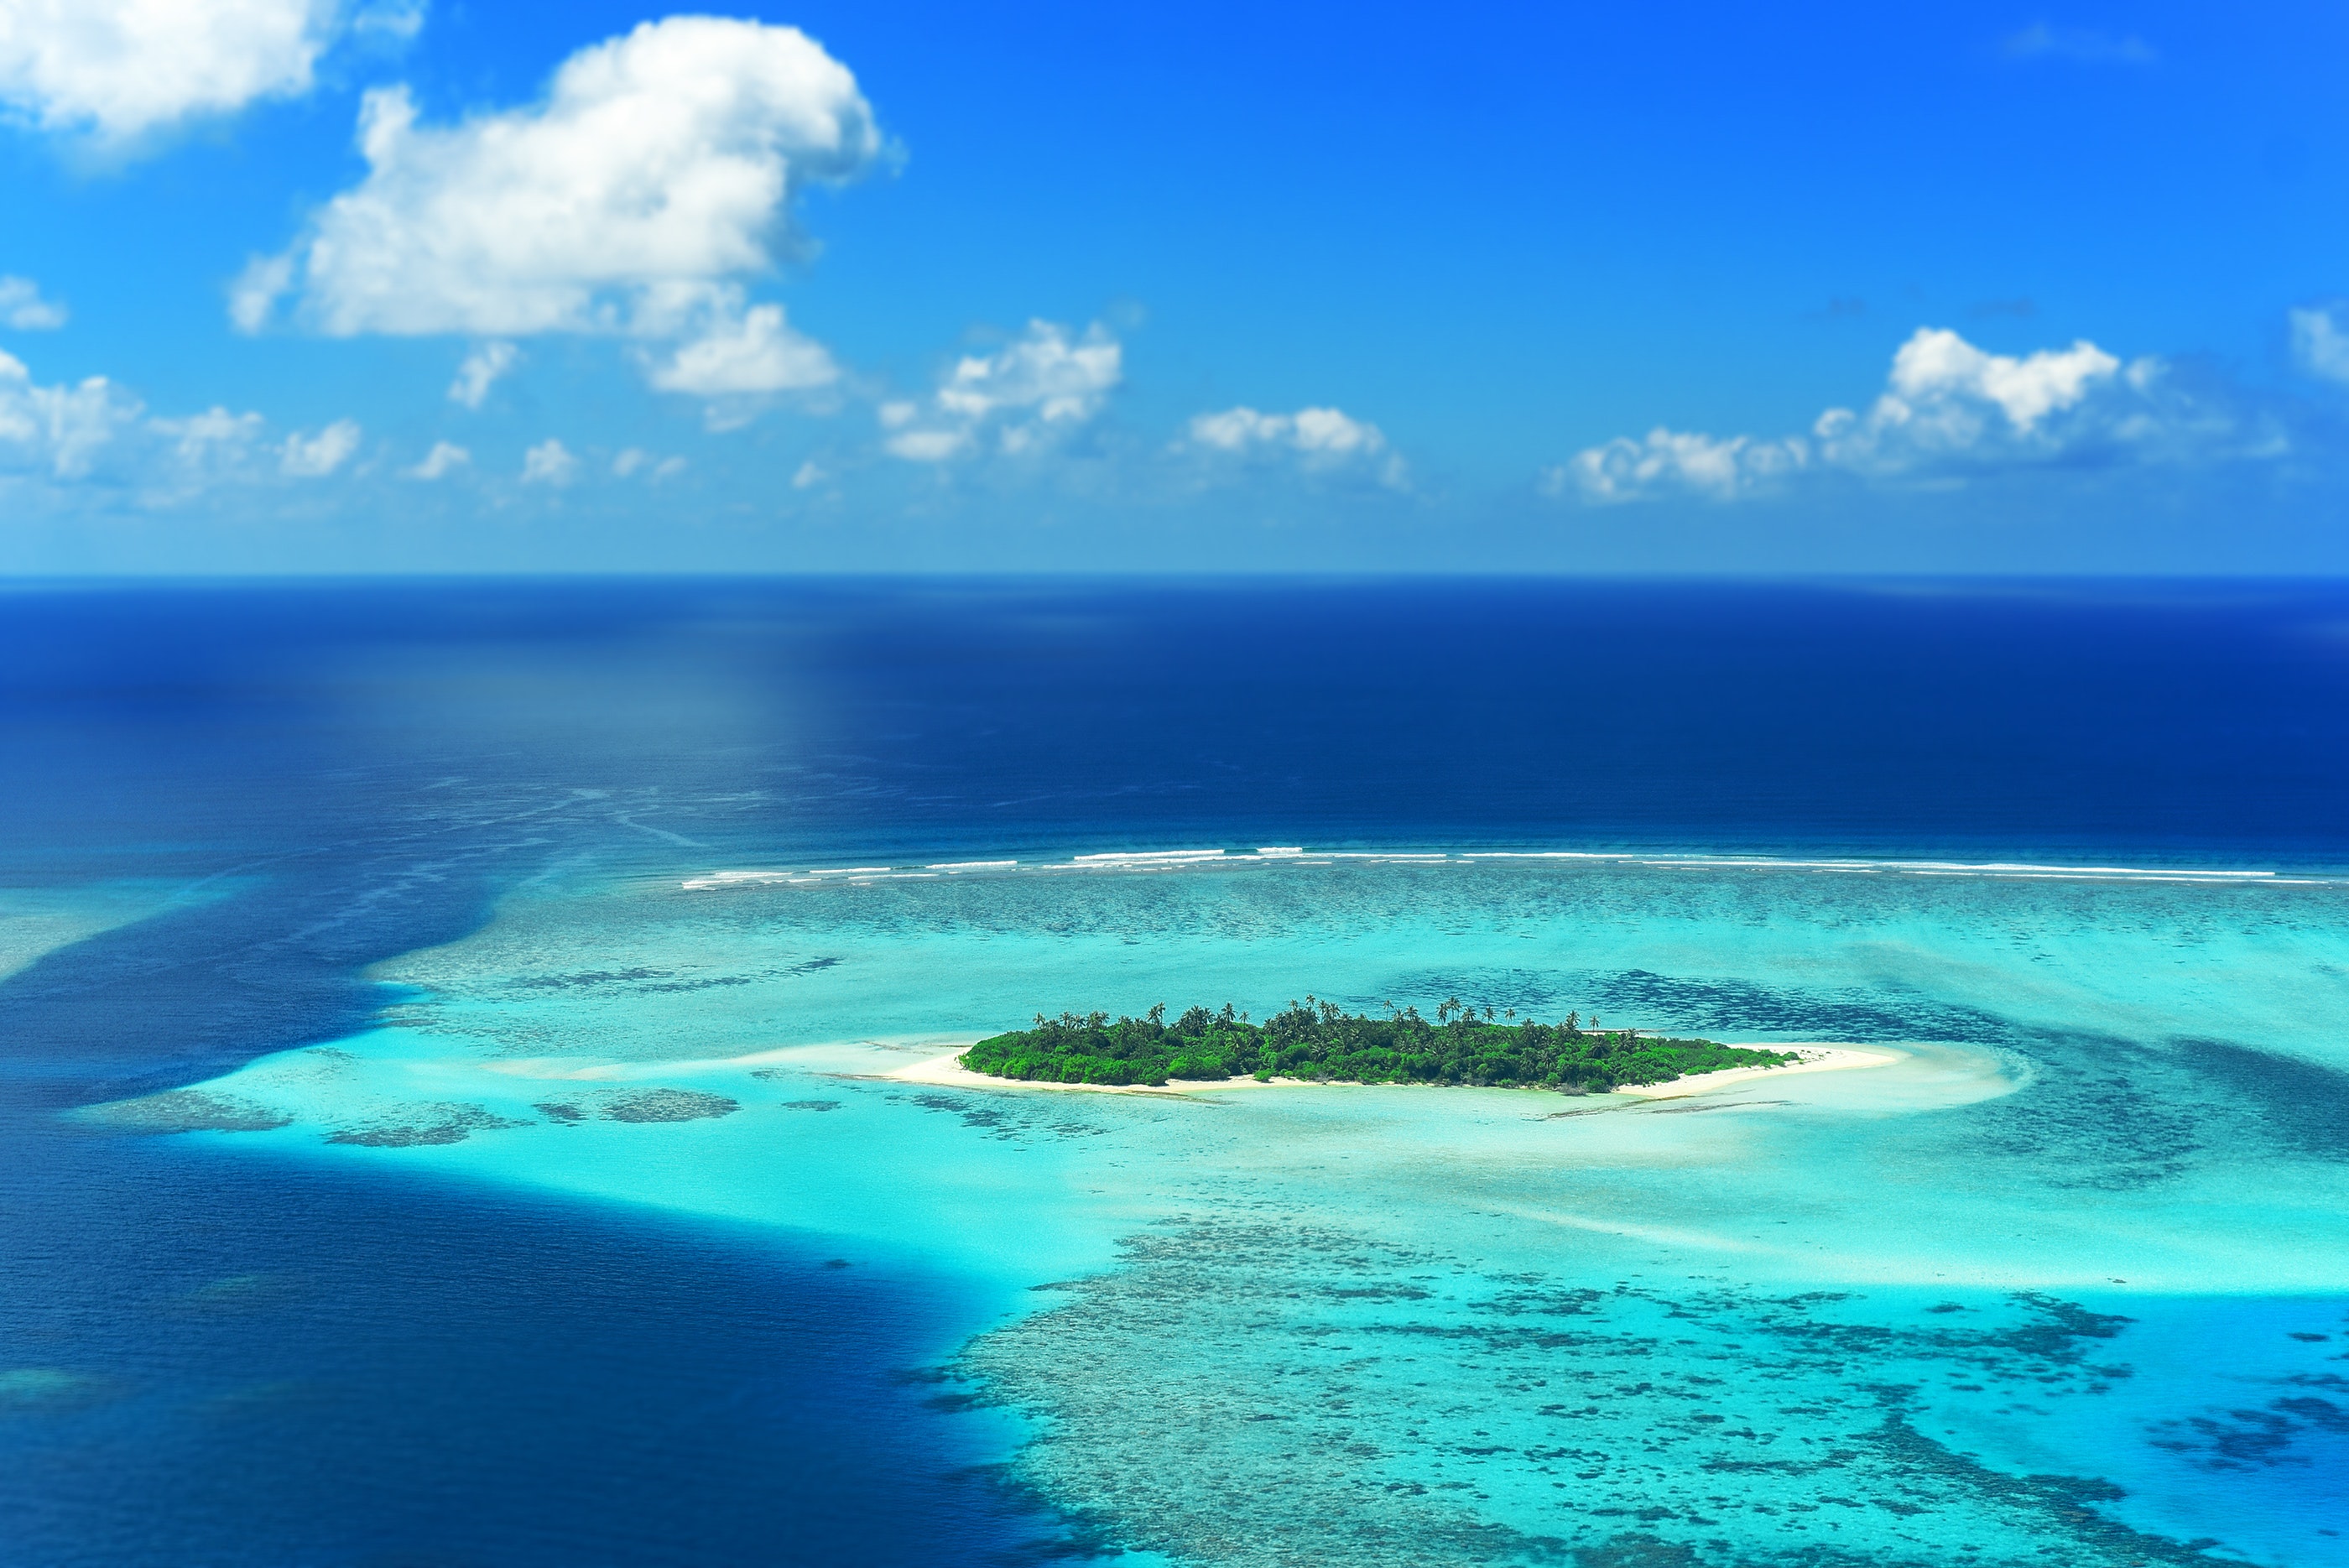 Velassaru Resort Maldives